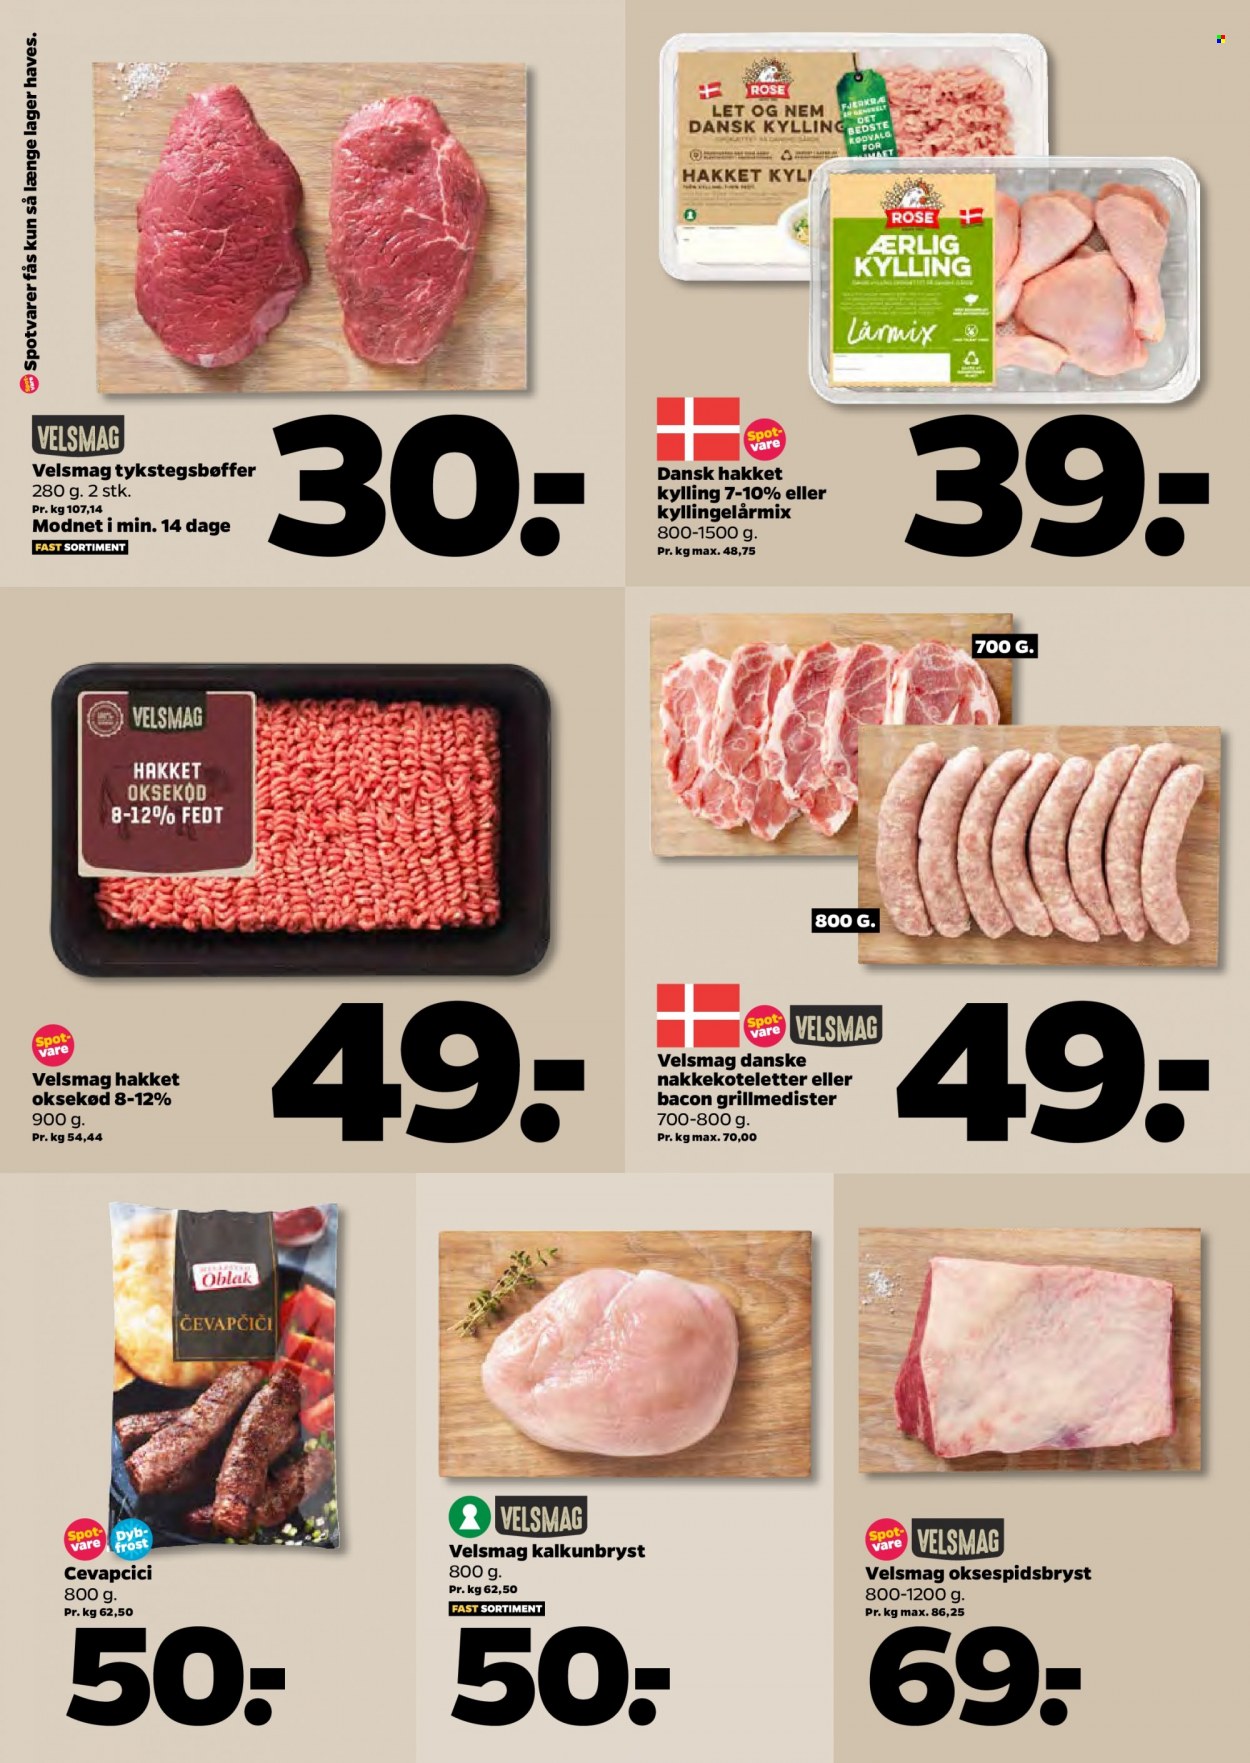 thumbnail - Netto tilbud  - 18.9.2021 - 24.9.2021 - tilbudsprodukter - hakket oksekød, tykstegsbøf, koteletter, oksekød, nakkekoteletter, kalkunbryst, kylling, kyllingeoverlår, kyllingeunderlår, lårmix af kyllling, bacon. Side 10.